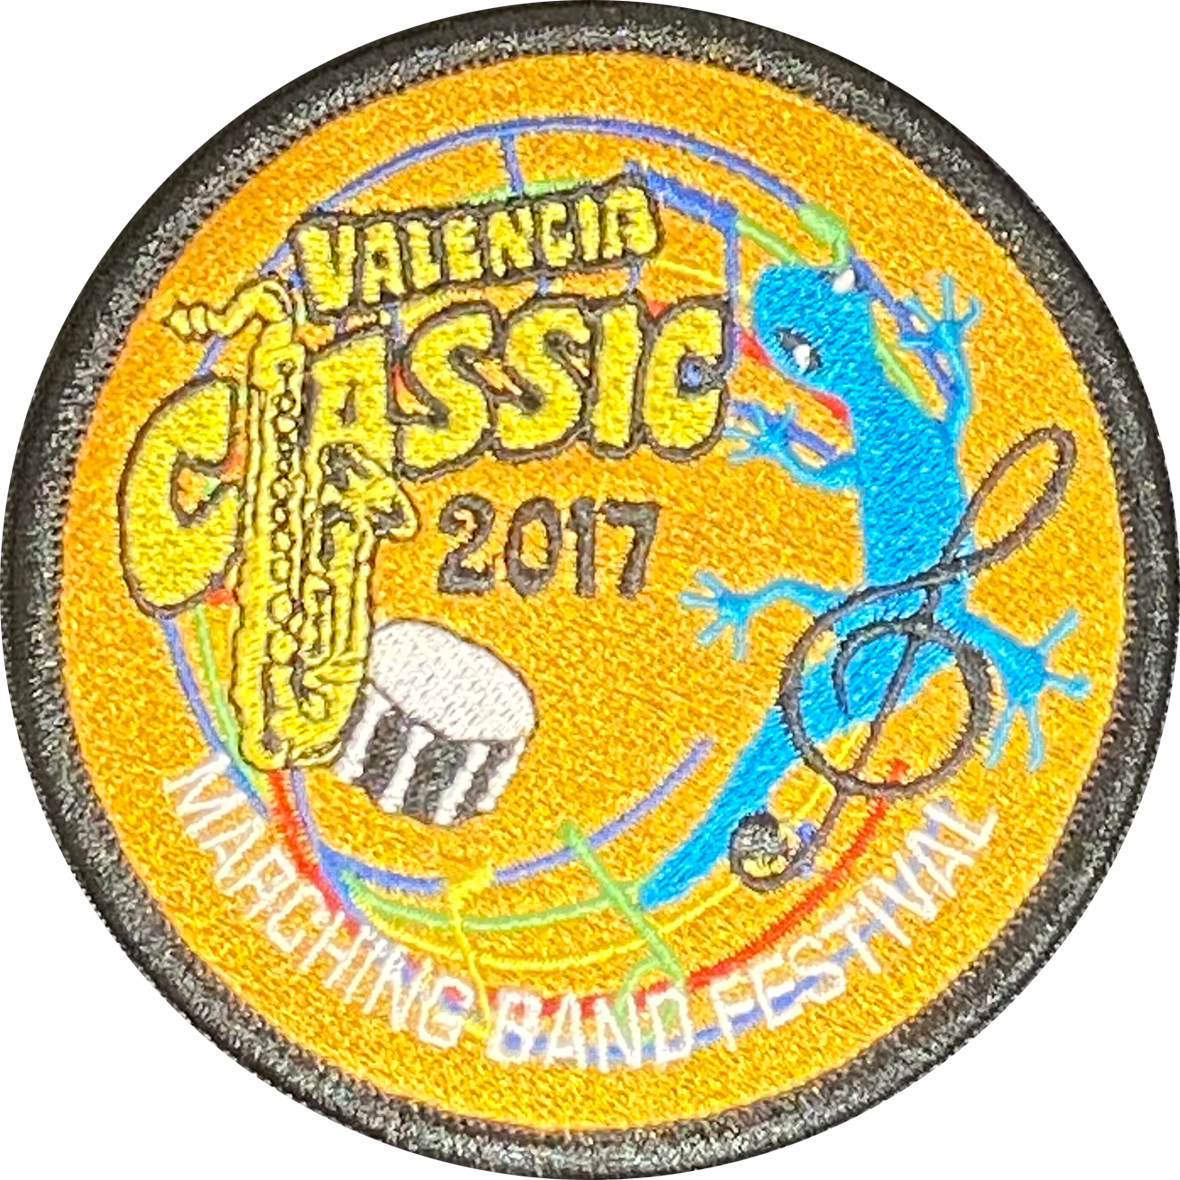 Valencia Classic 2017 Patch